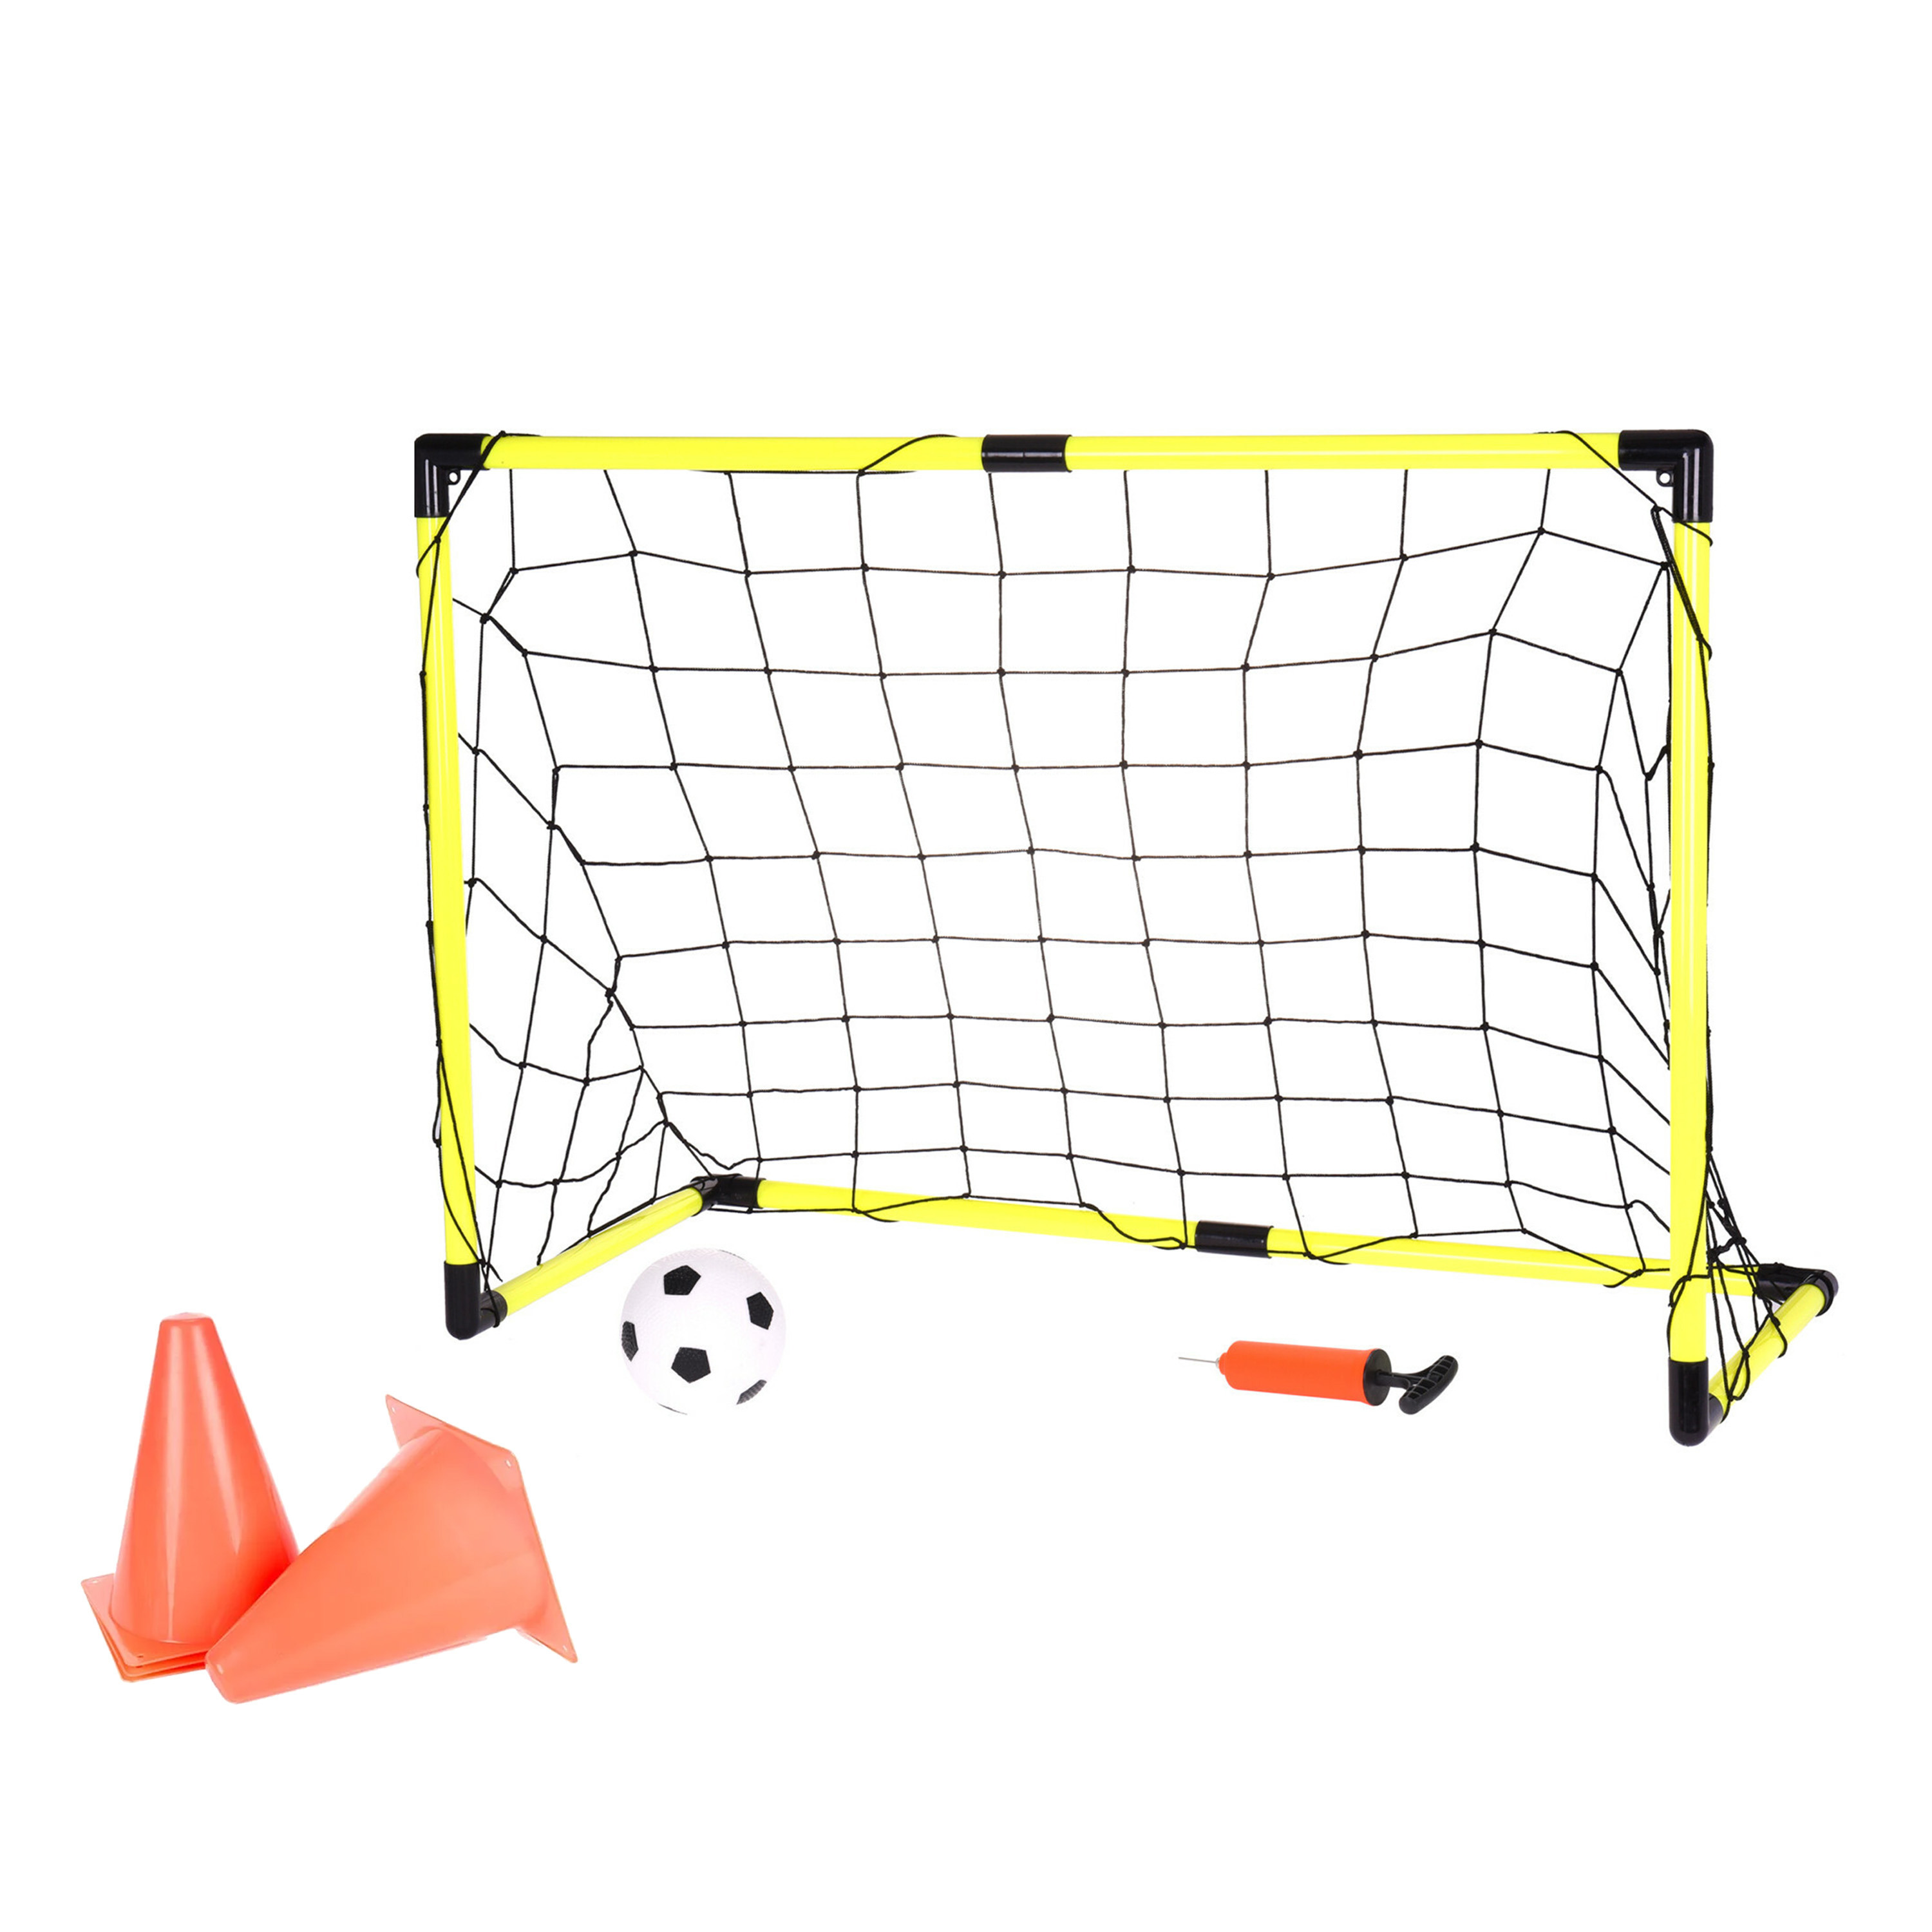 Voetbaldoel met voetbal, bal pomp en pionnen - 90 x 60 x 45 cm - voetbalgoal - training/buitenspel -